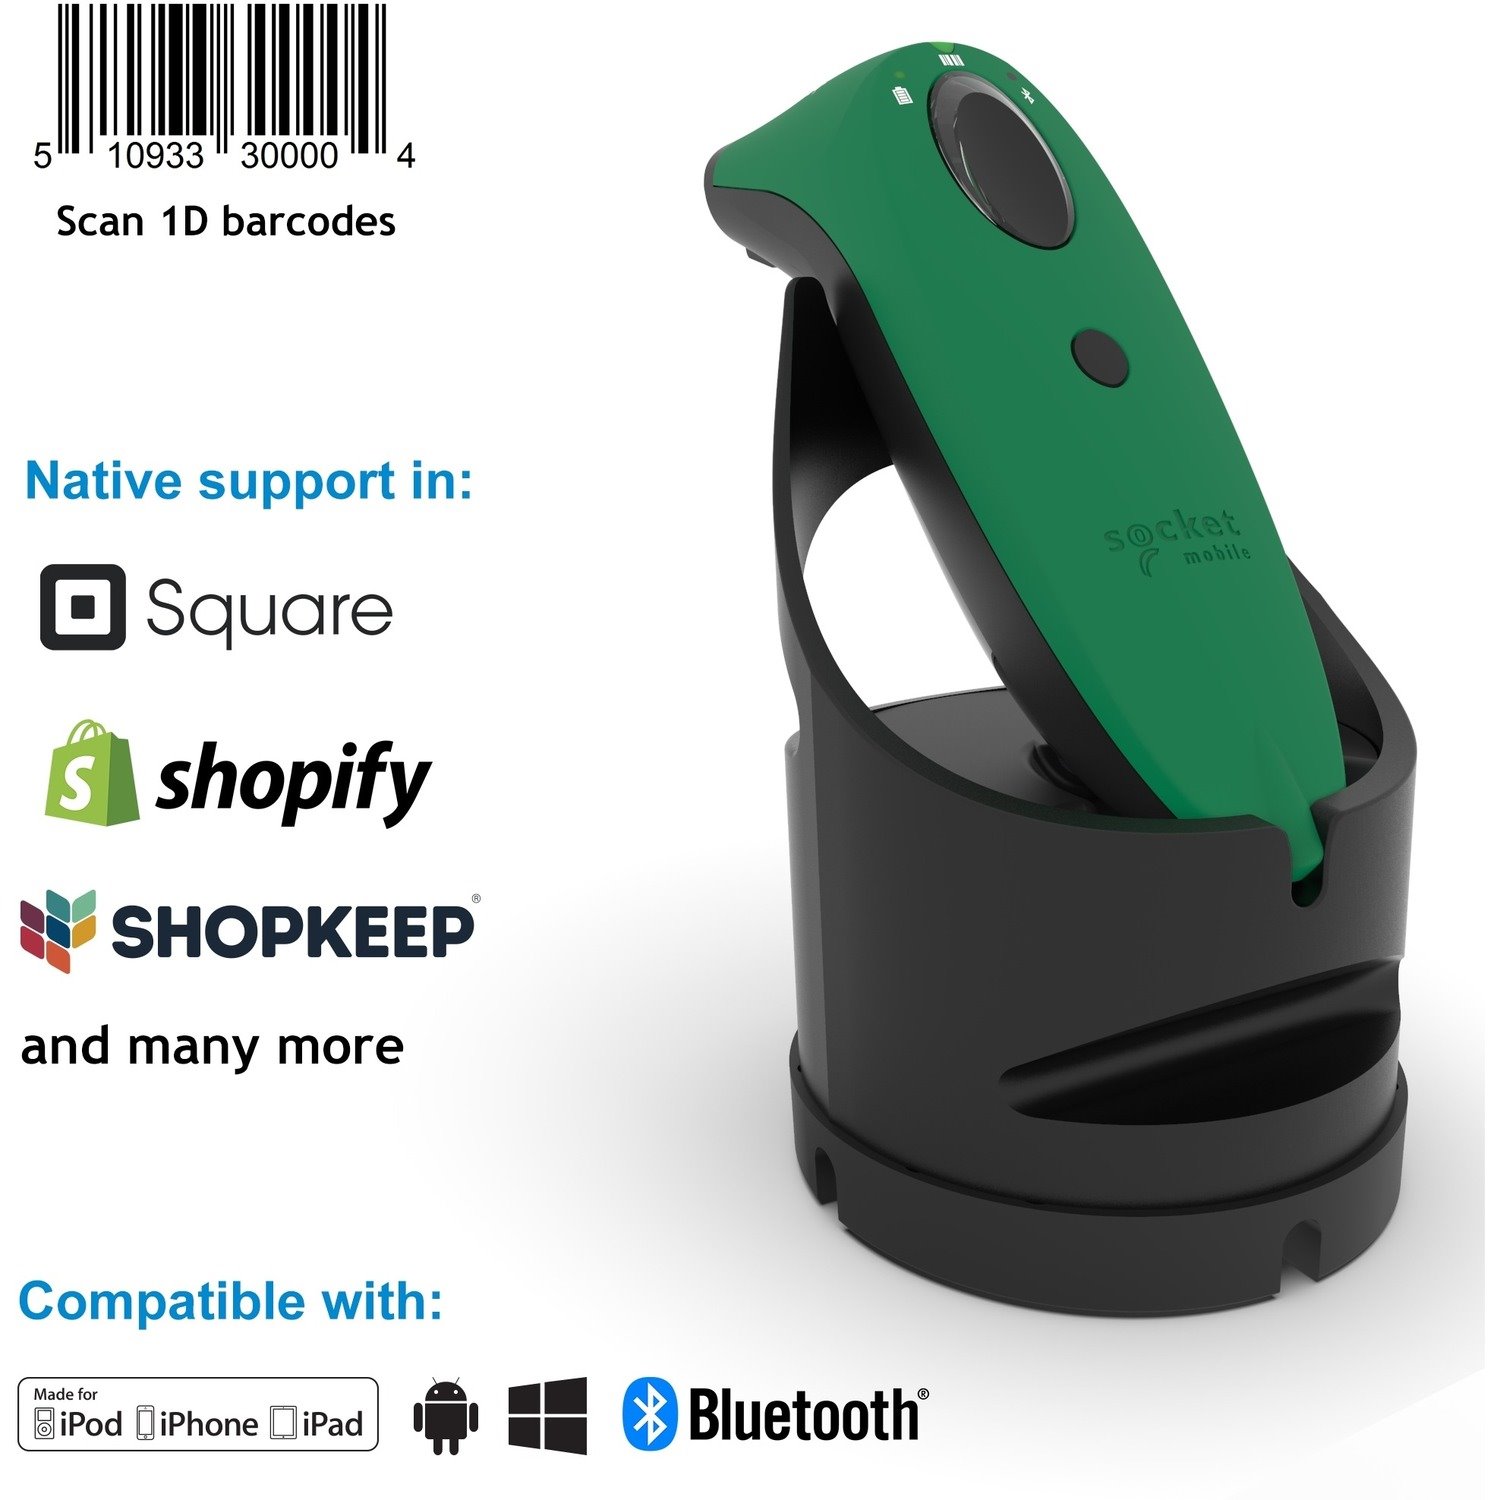 Socket Mobile SocketScan S730 Handheld Barcode Scanner - Wireless Connectivity - Green, Black